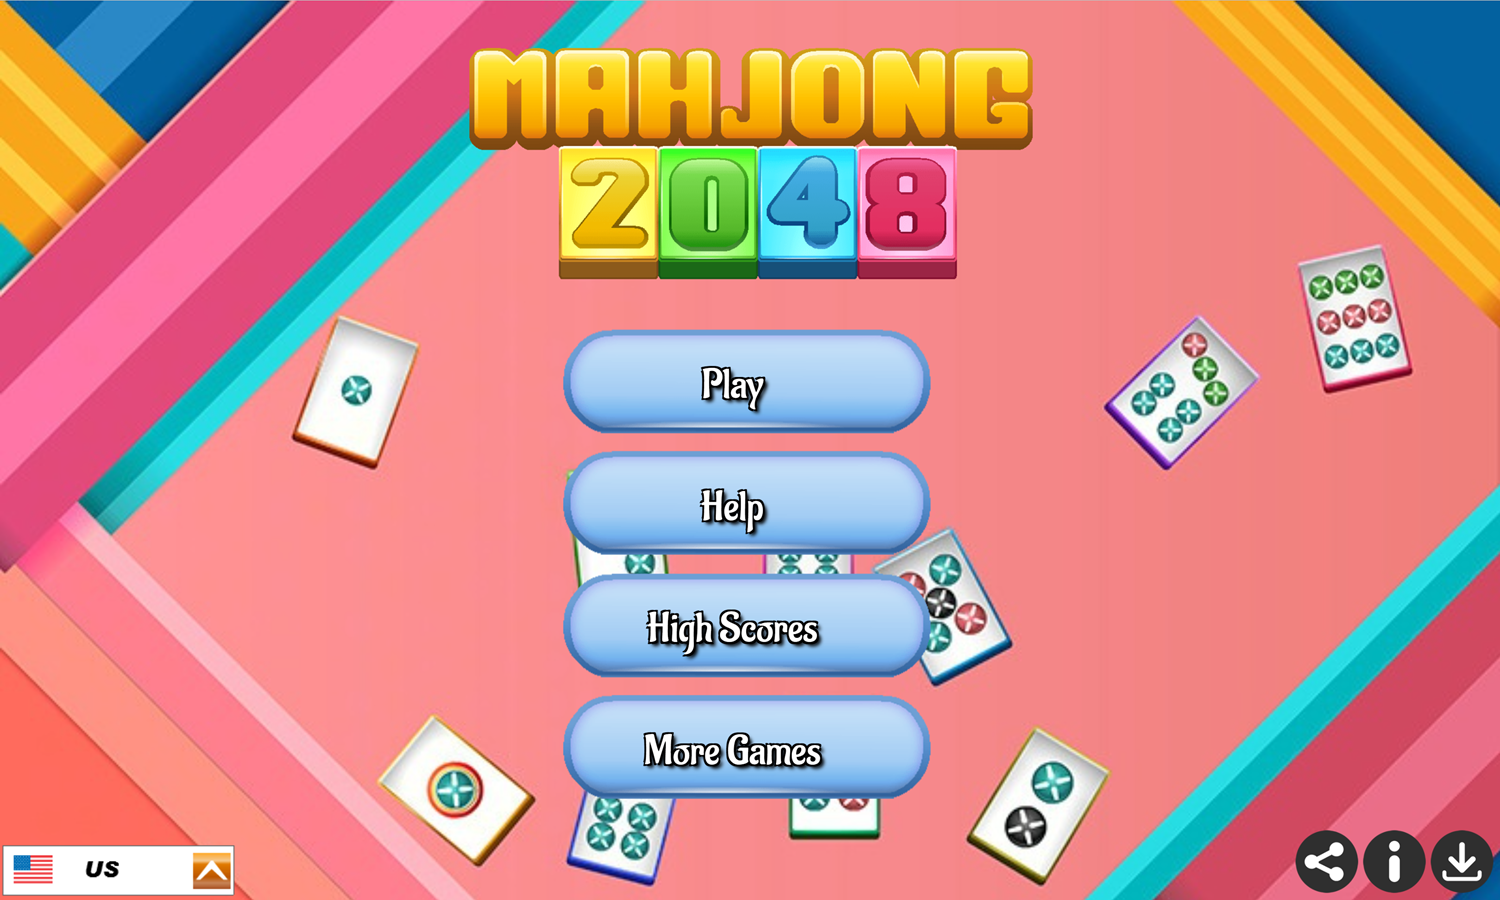 Mahjong 2048 Game Welcome Screen Screenshot.